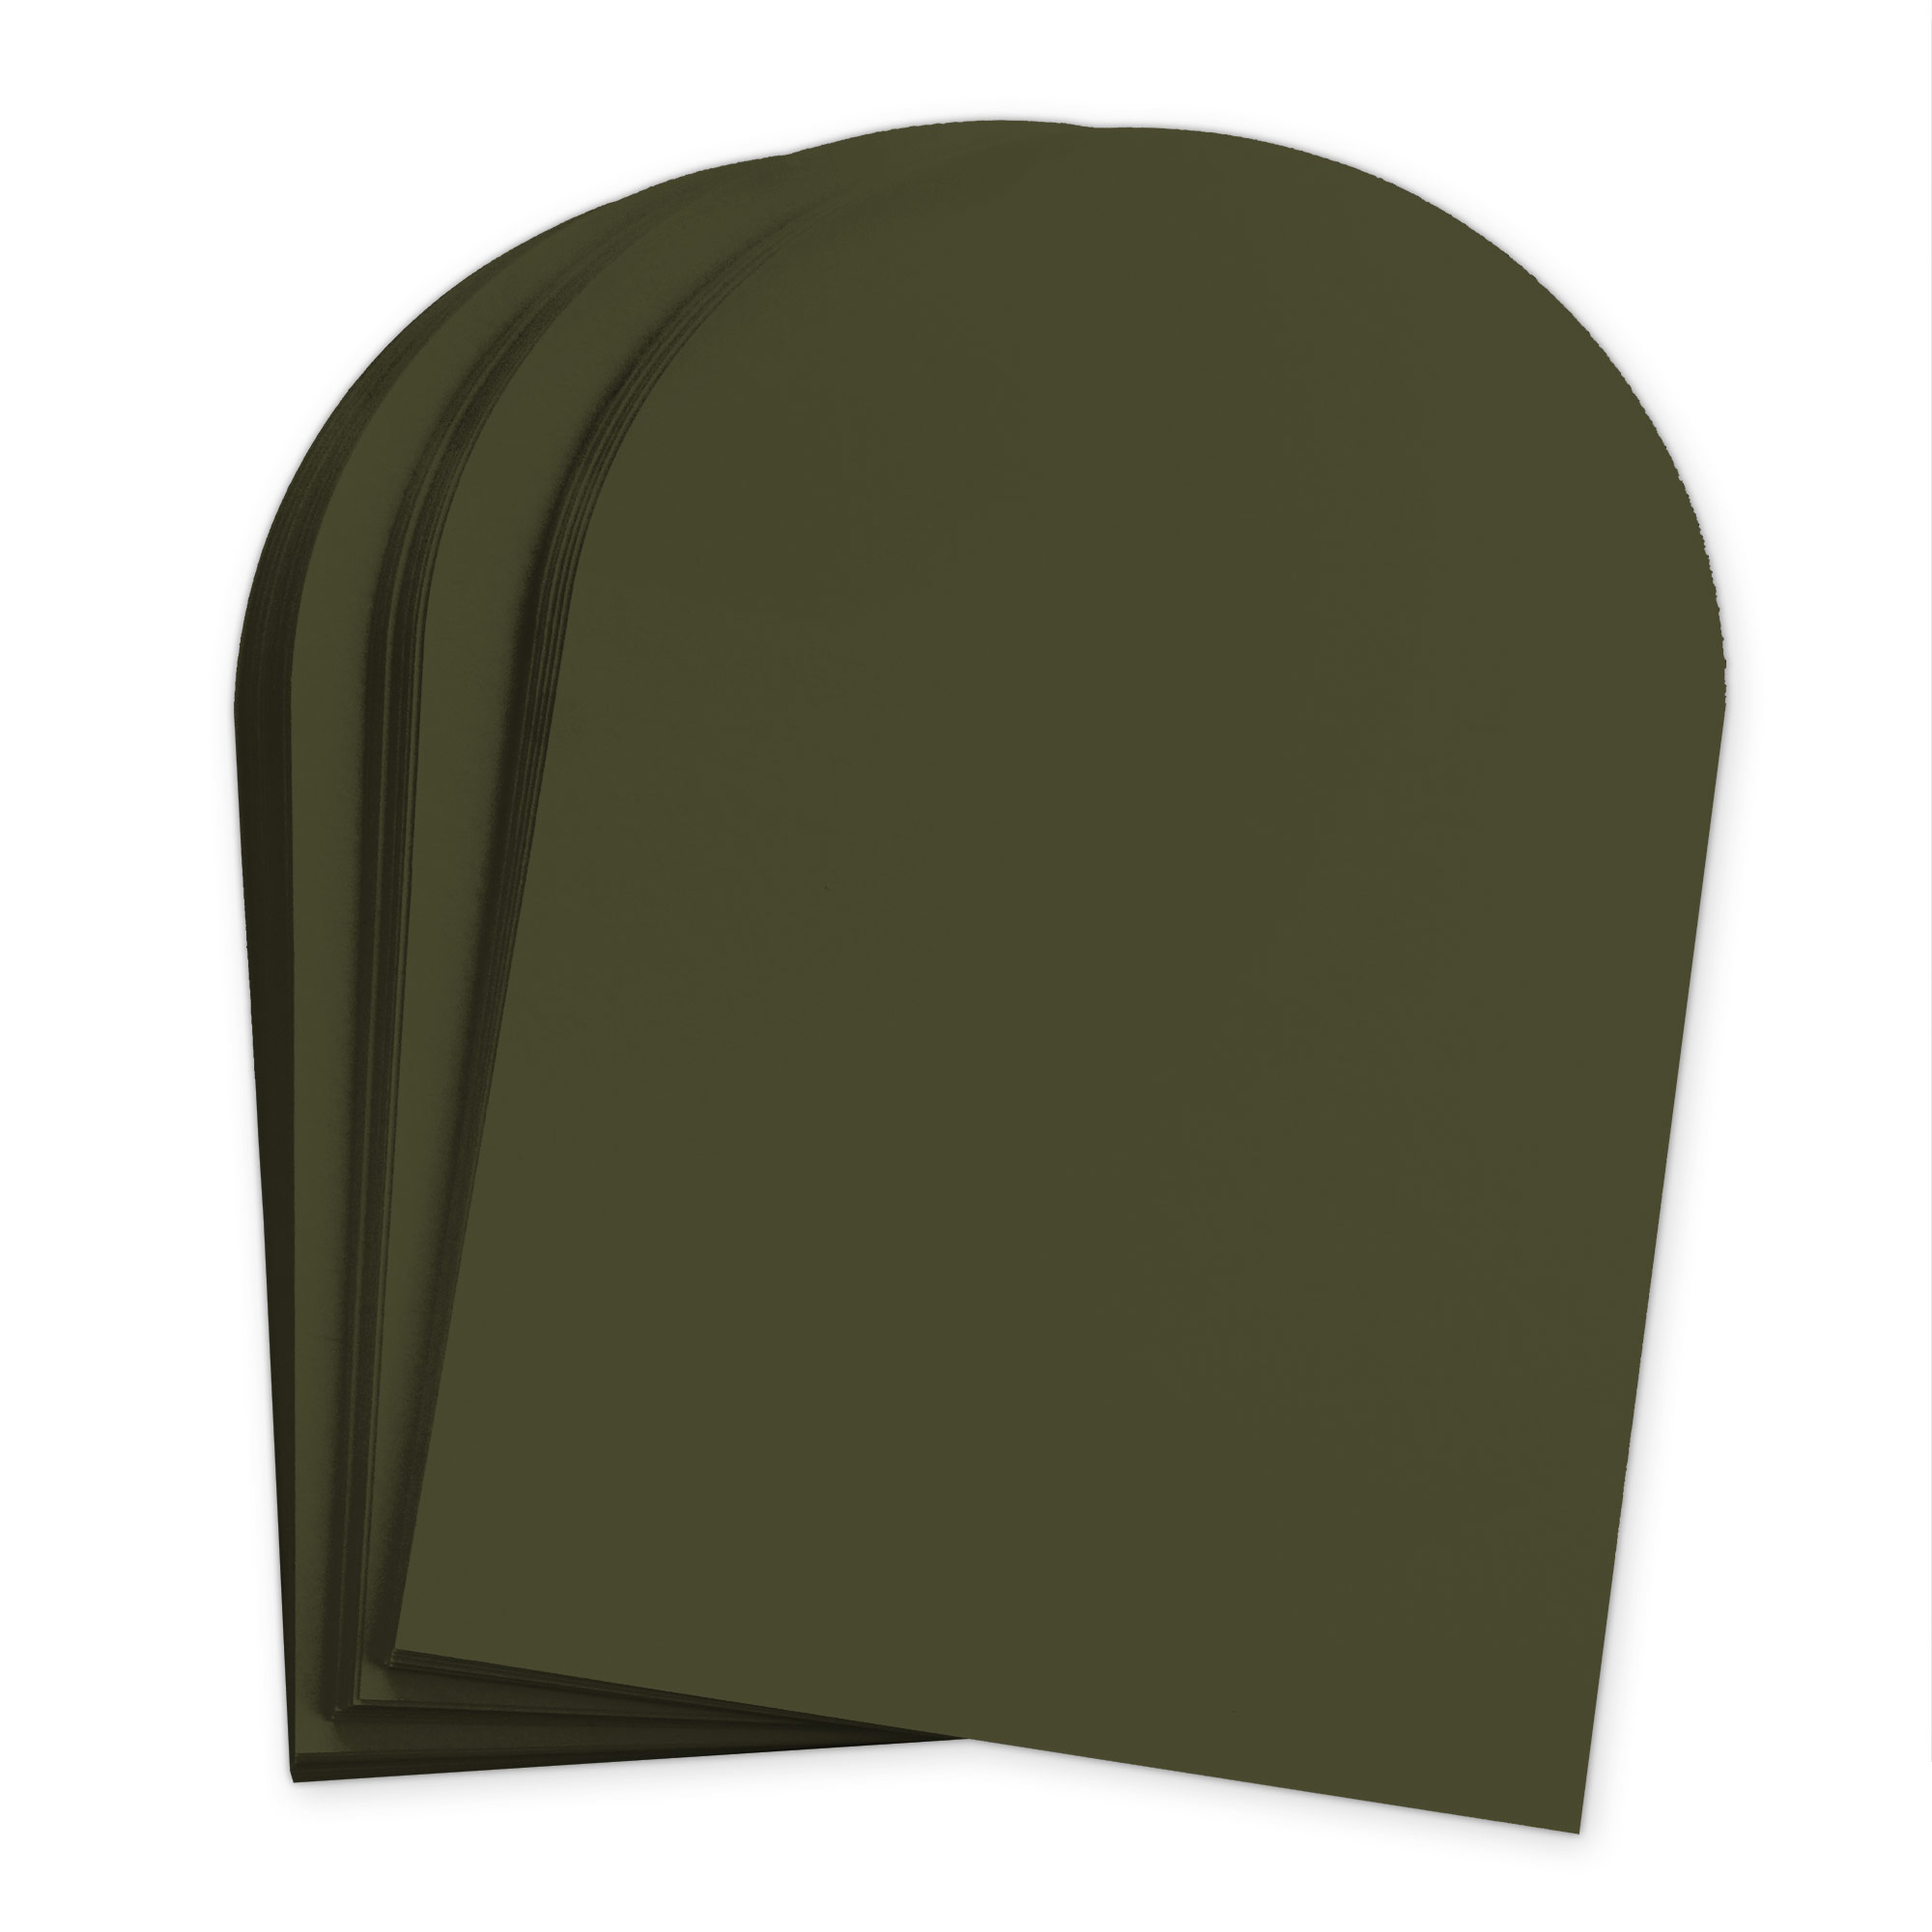 Forest Green Arch Shaped Card - A2 Gmund Colors Matt 4 1/4 x 5 1/2 111C